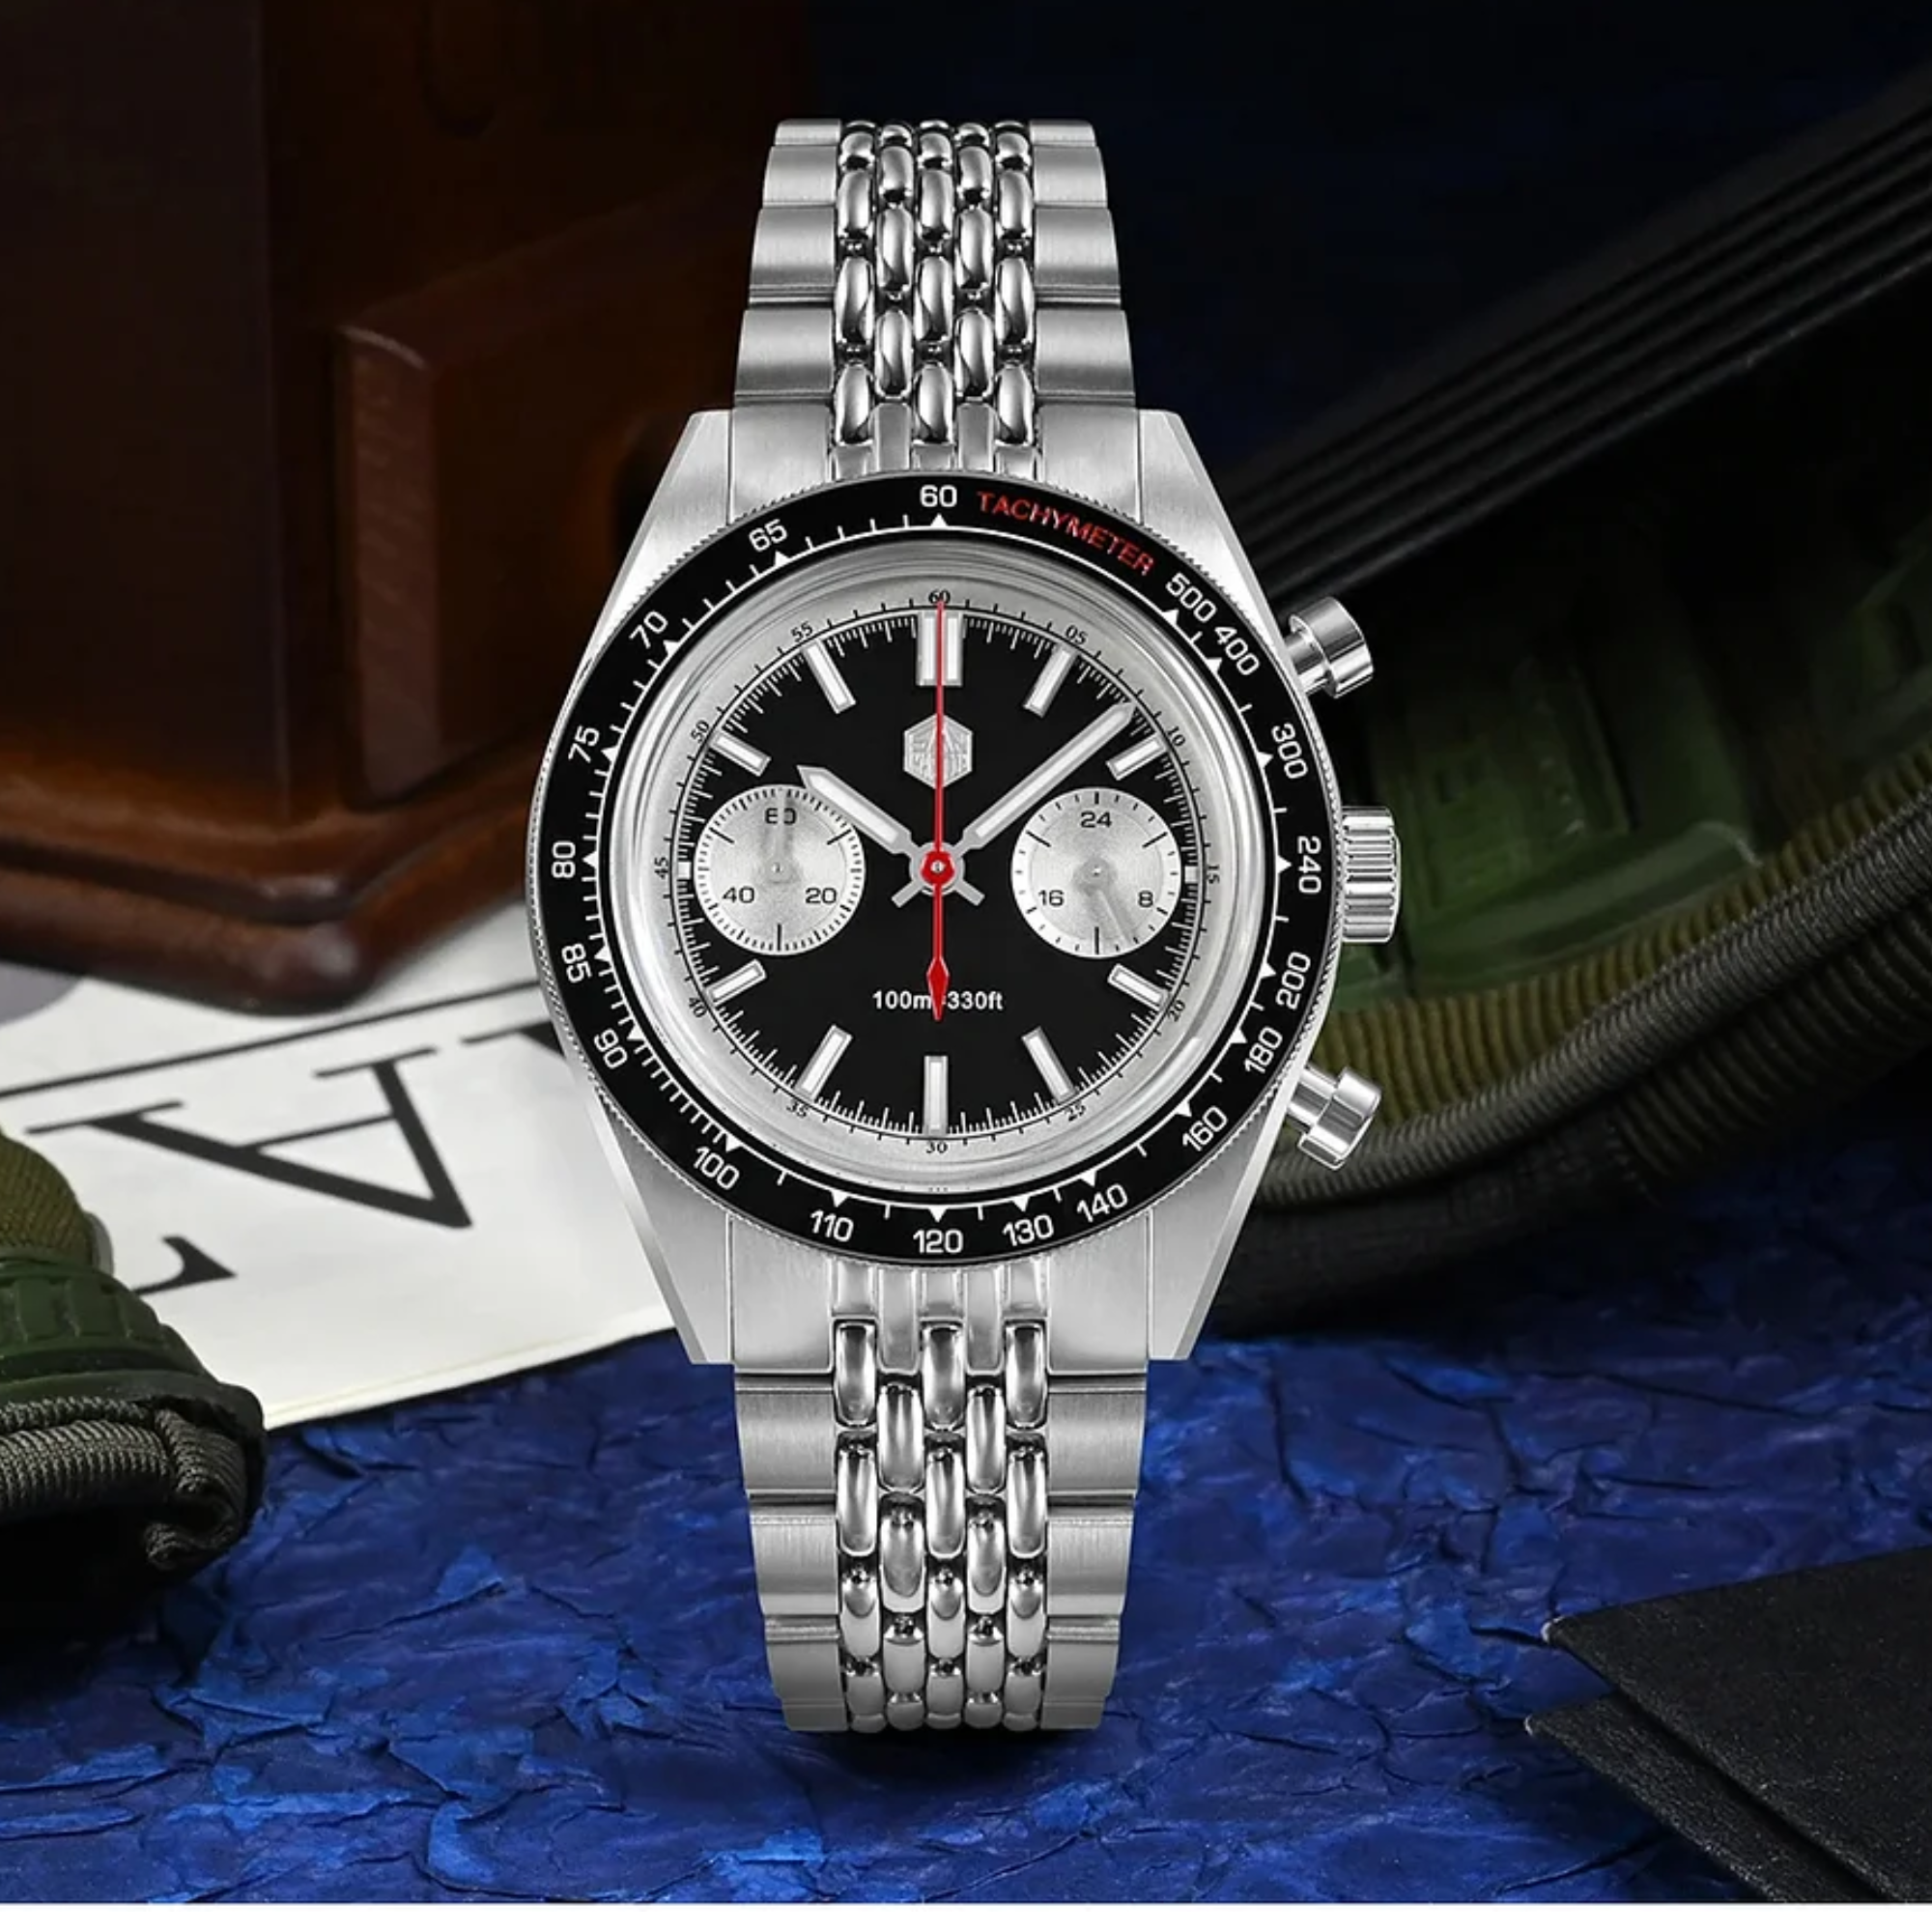 San Martin Chronograph VK64 Quartz Watch Original Design SN0116 - Black